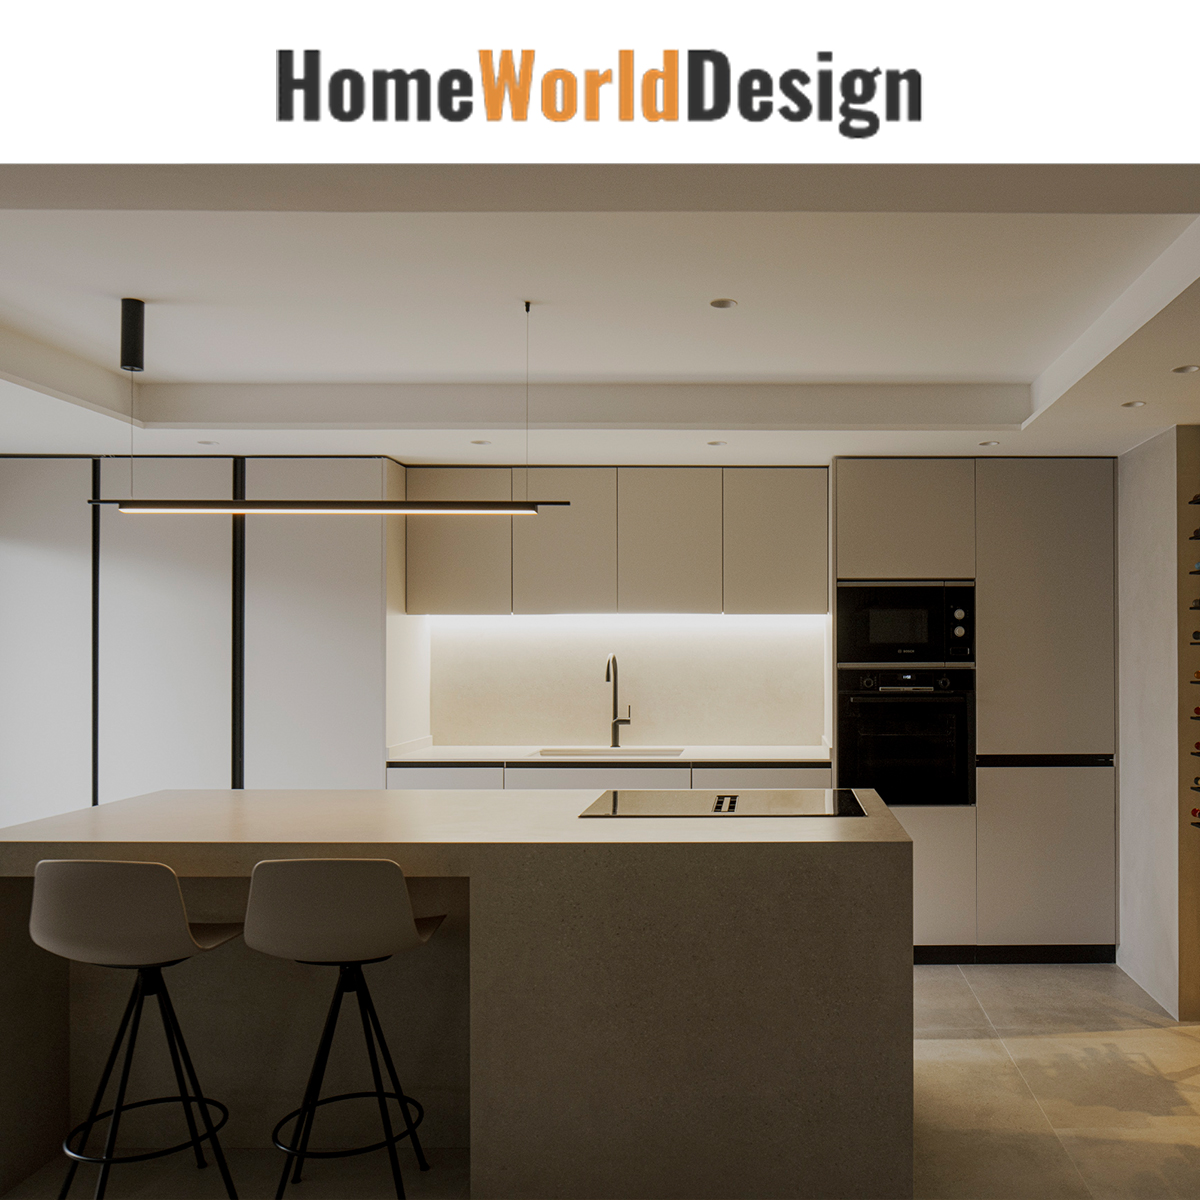 Home World Design